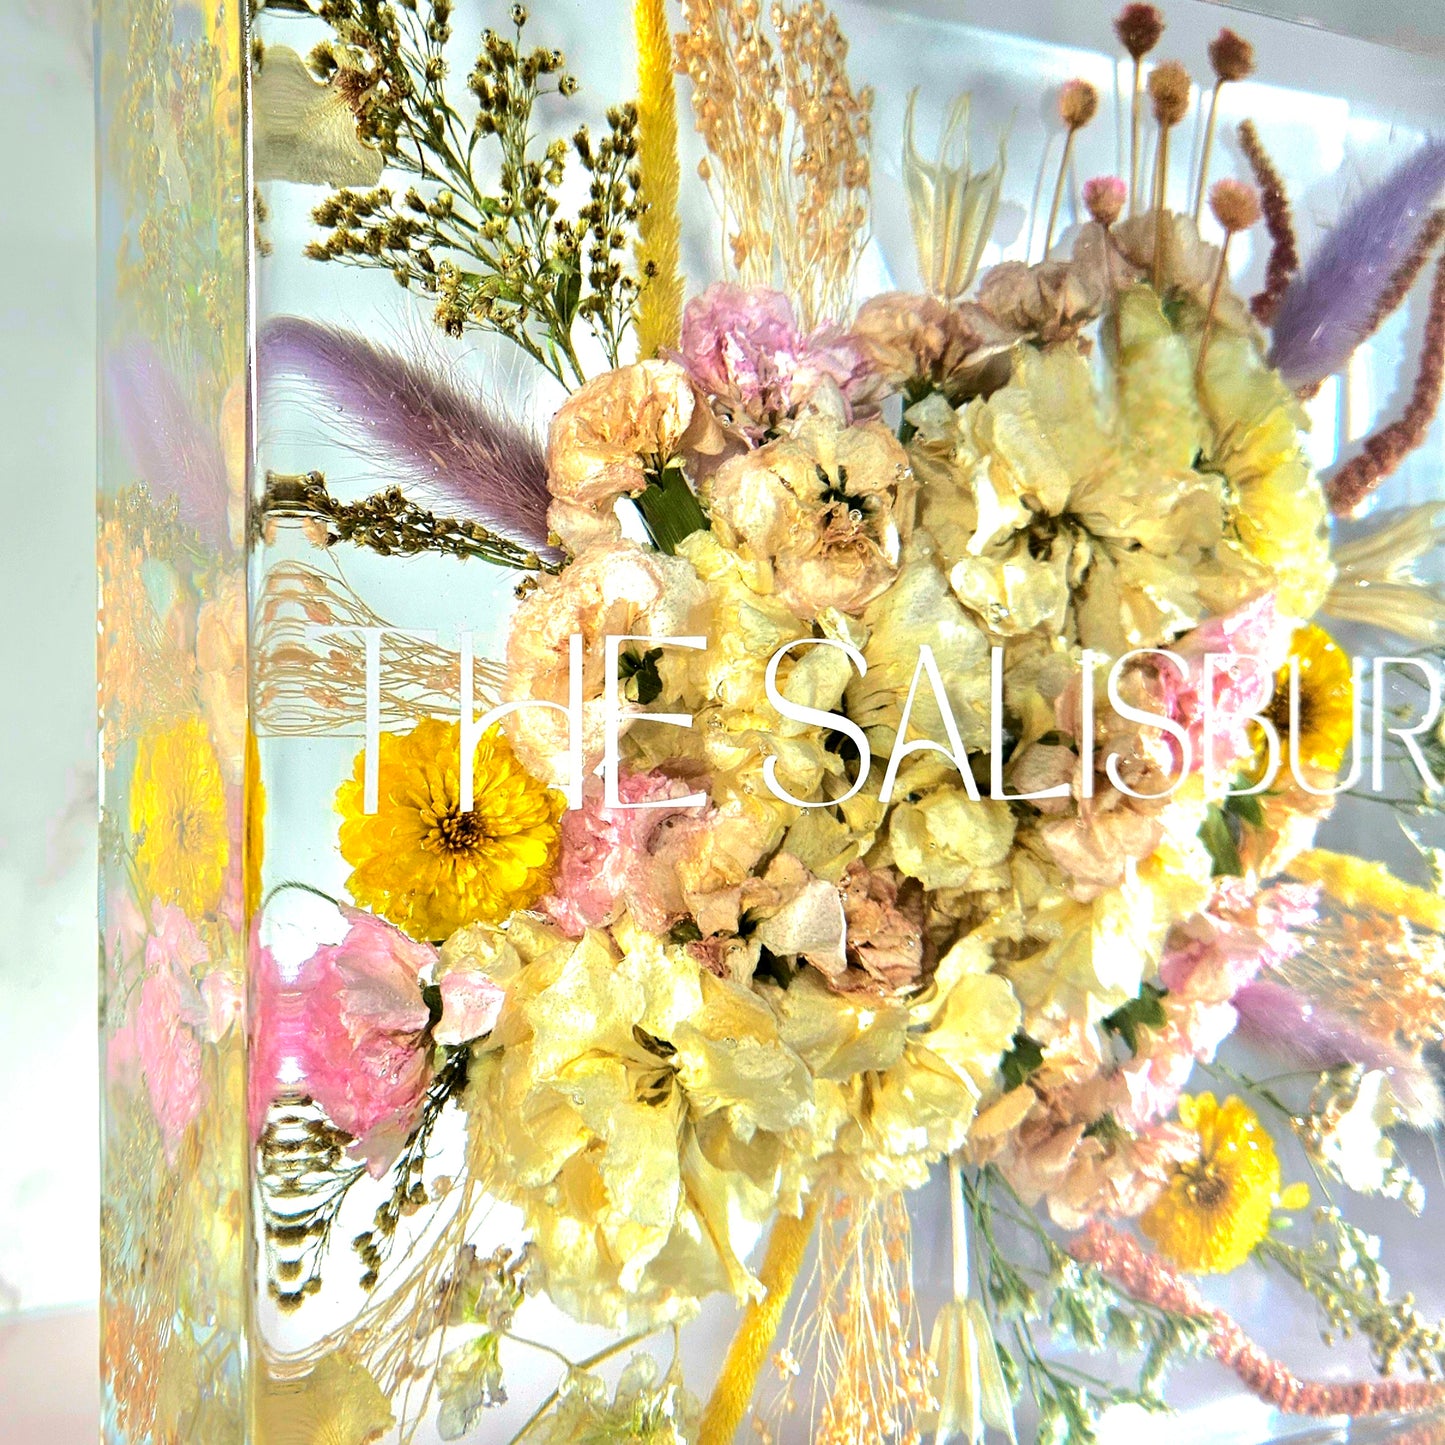 10"x10" 3D Resin Wedding Bouquet Preservation Save Your Wedding Flowers Forever Gift Keepsake